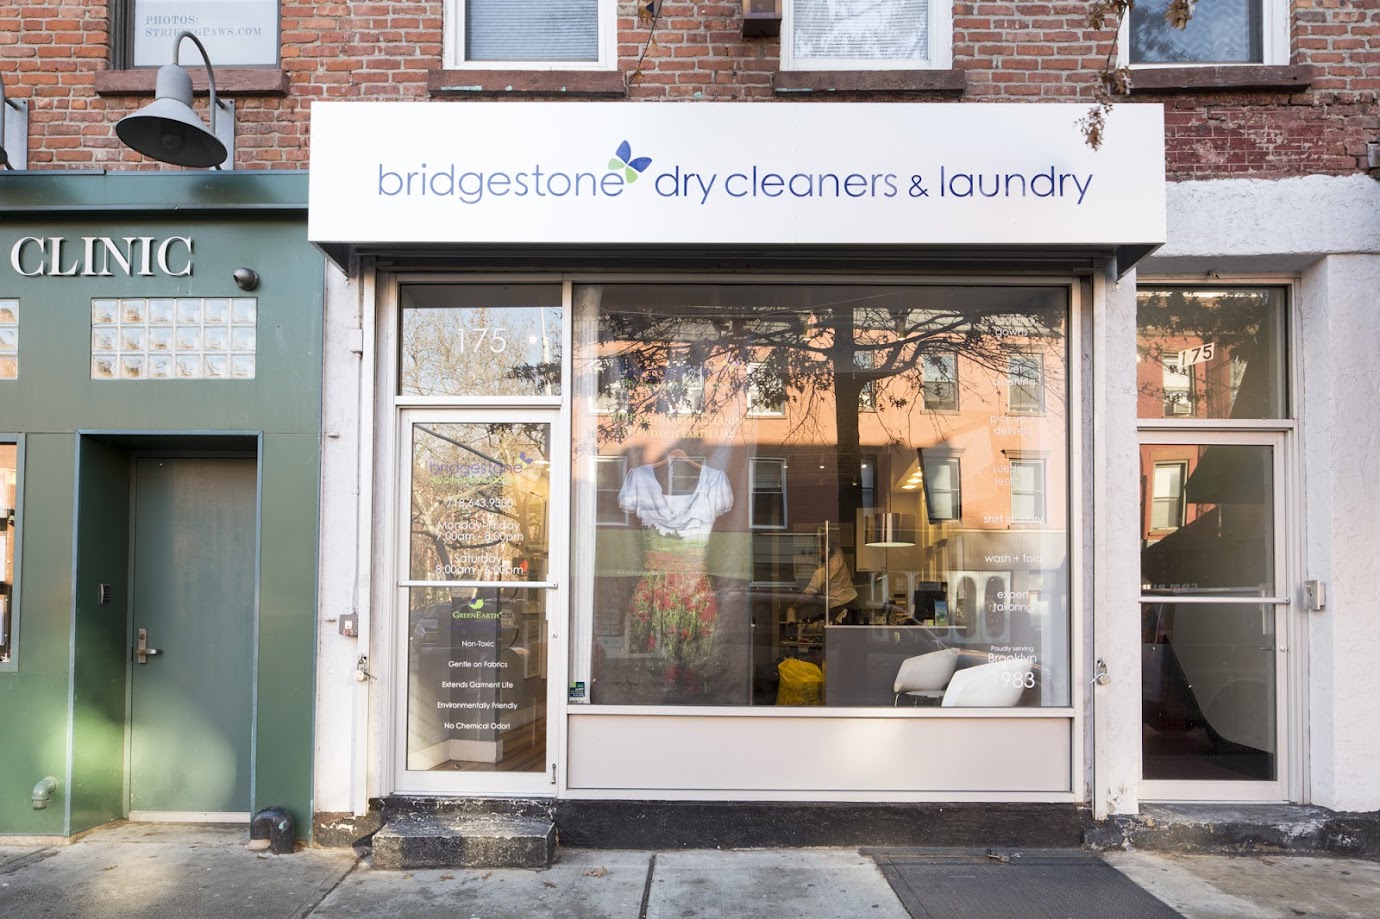 Bridgestone Dry Cleaners and Laundry